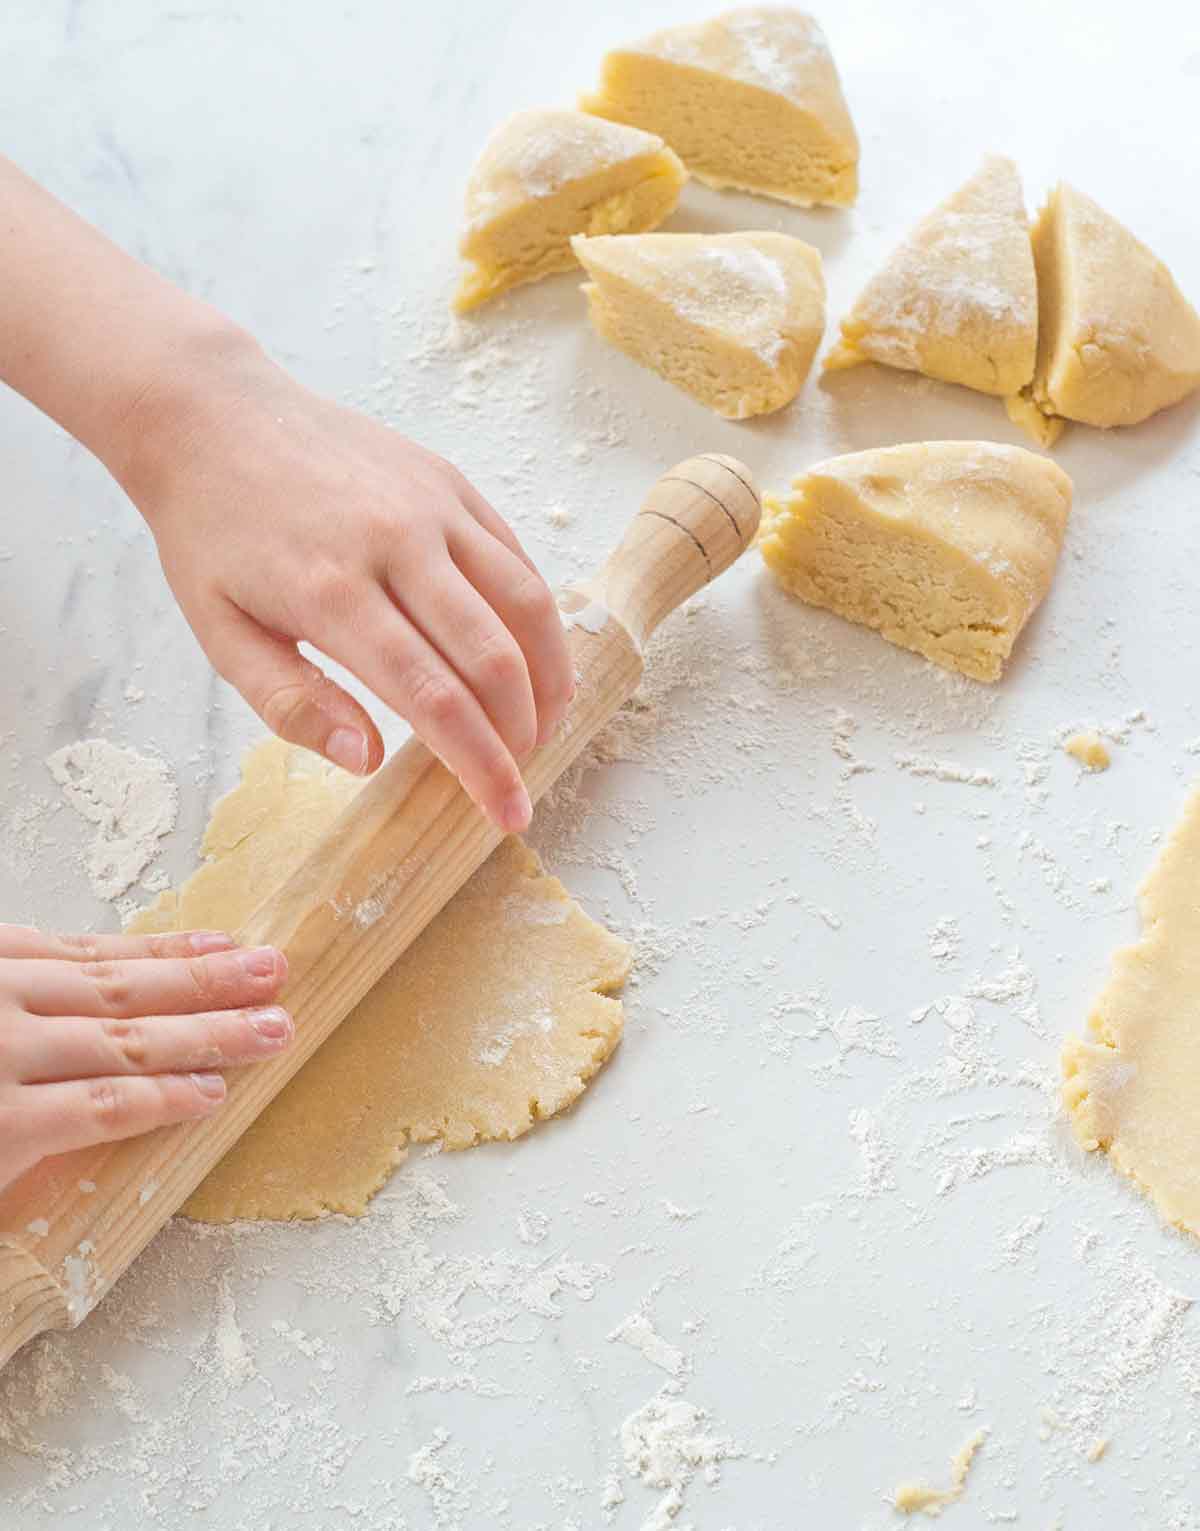 A girl's hand rolling dough